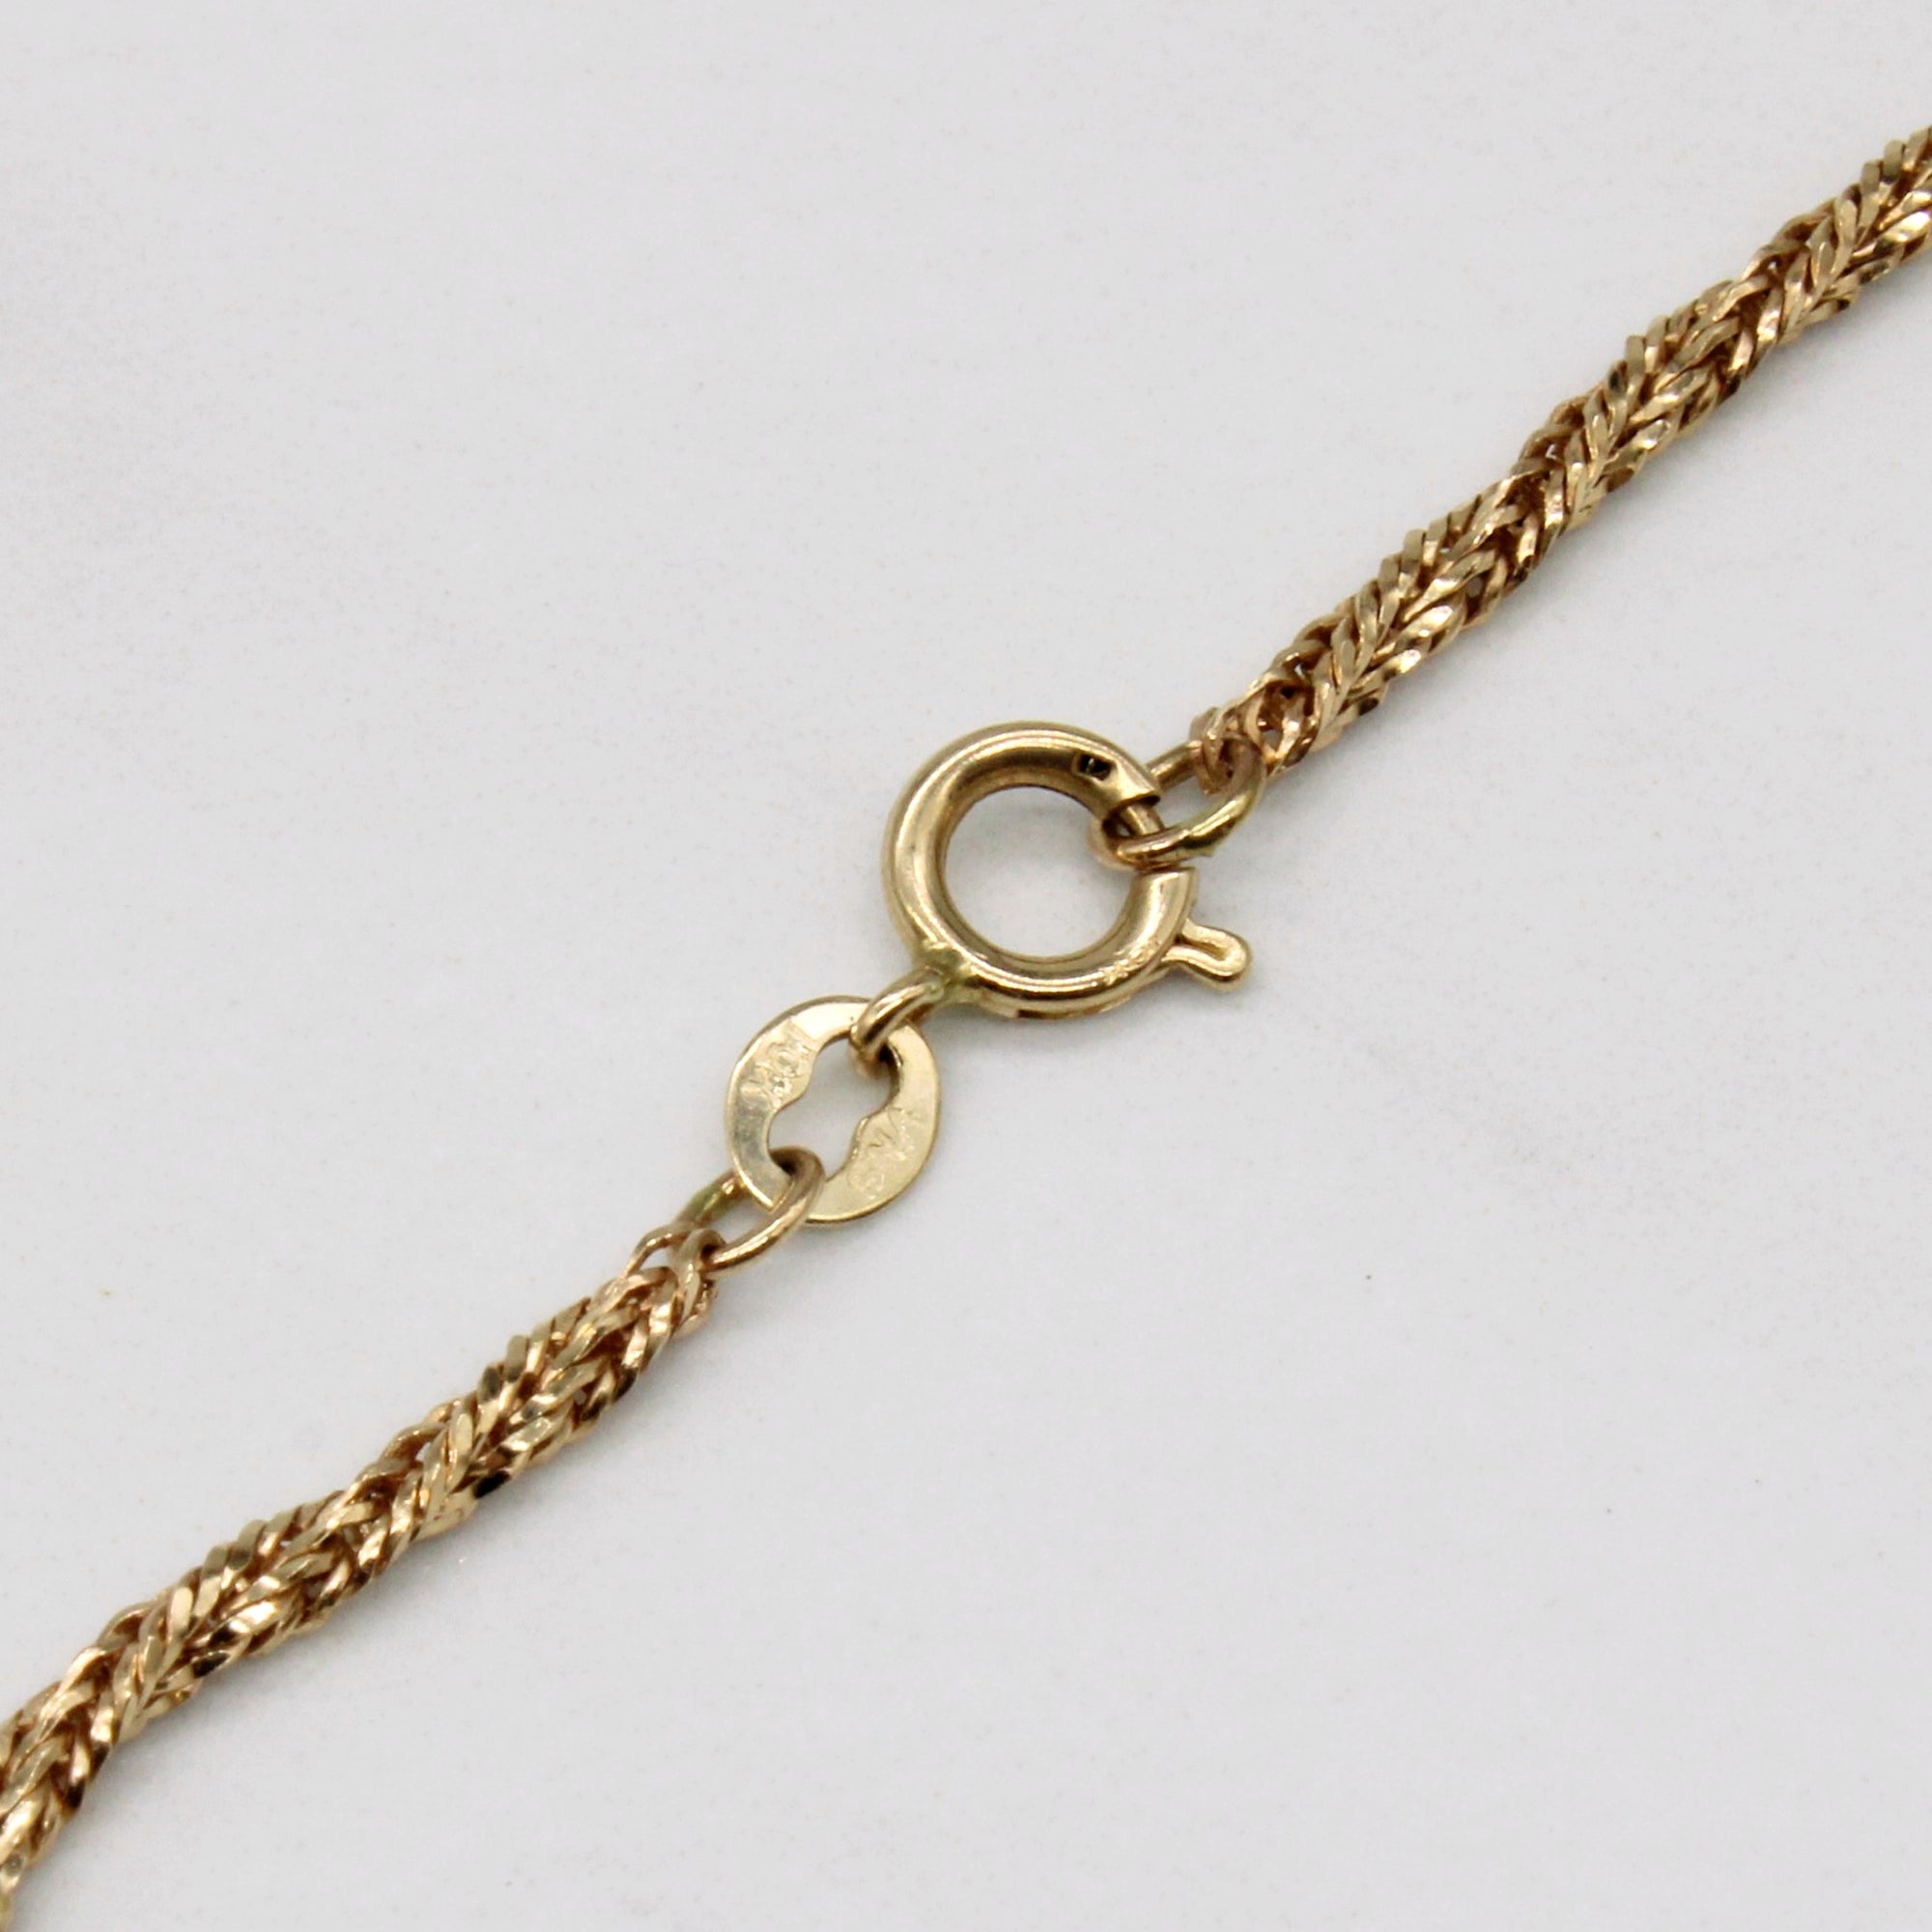 10k Yellow Gold Rope Chain Bracelet | 7.25